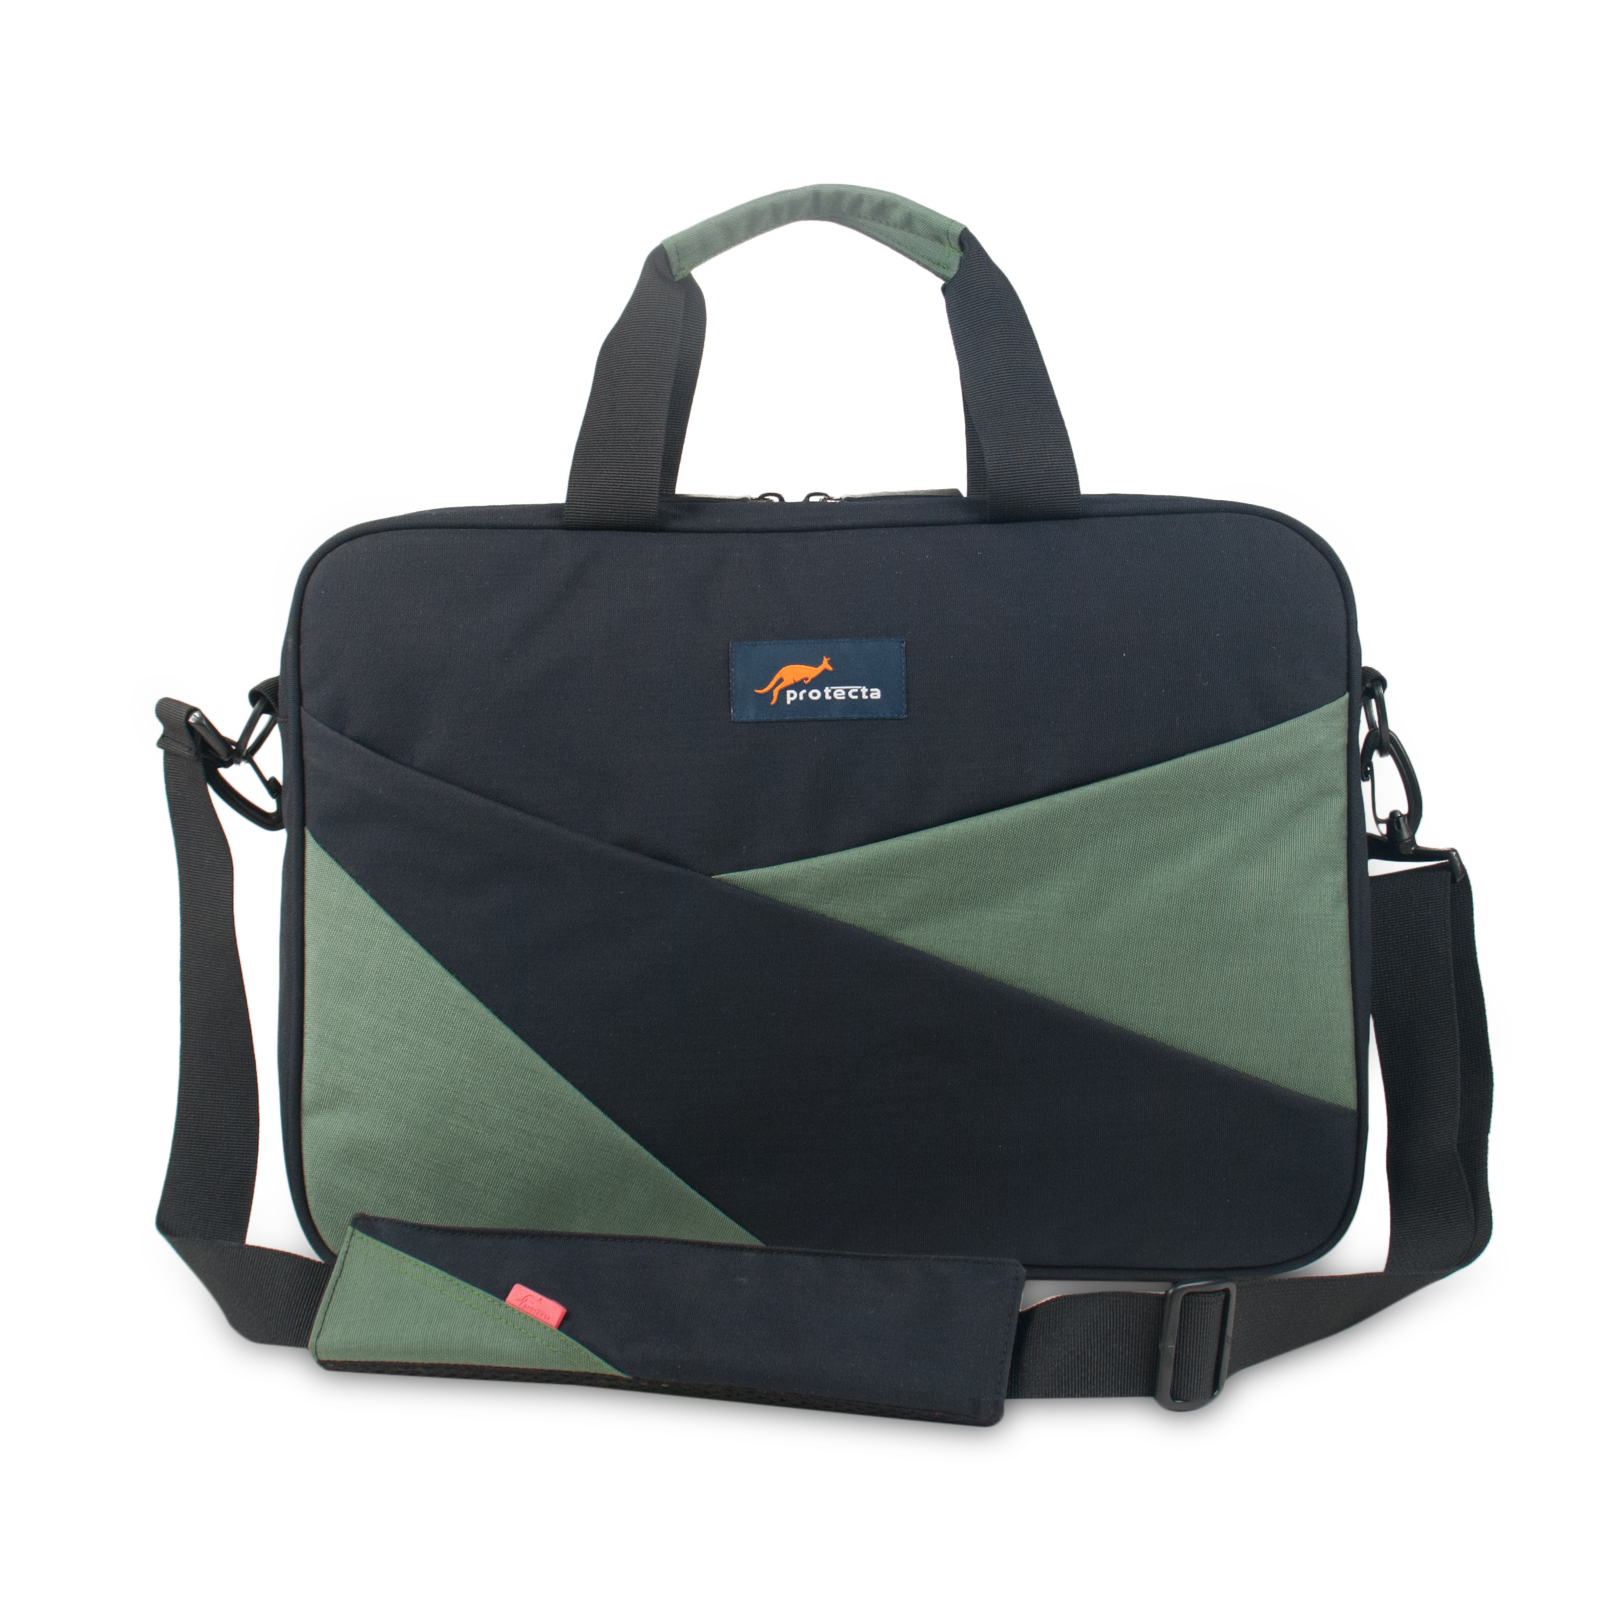 Protect Road Warrior Laptop Bag Black-Green- 4